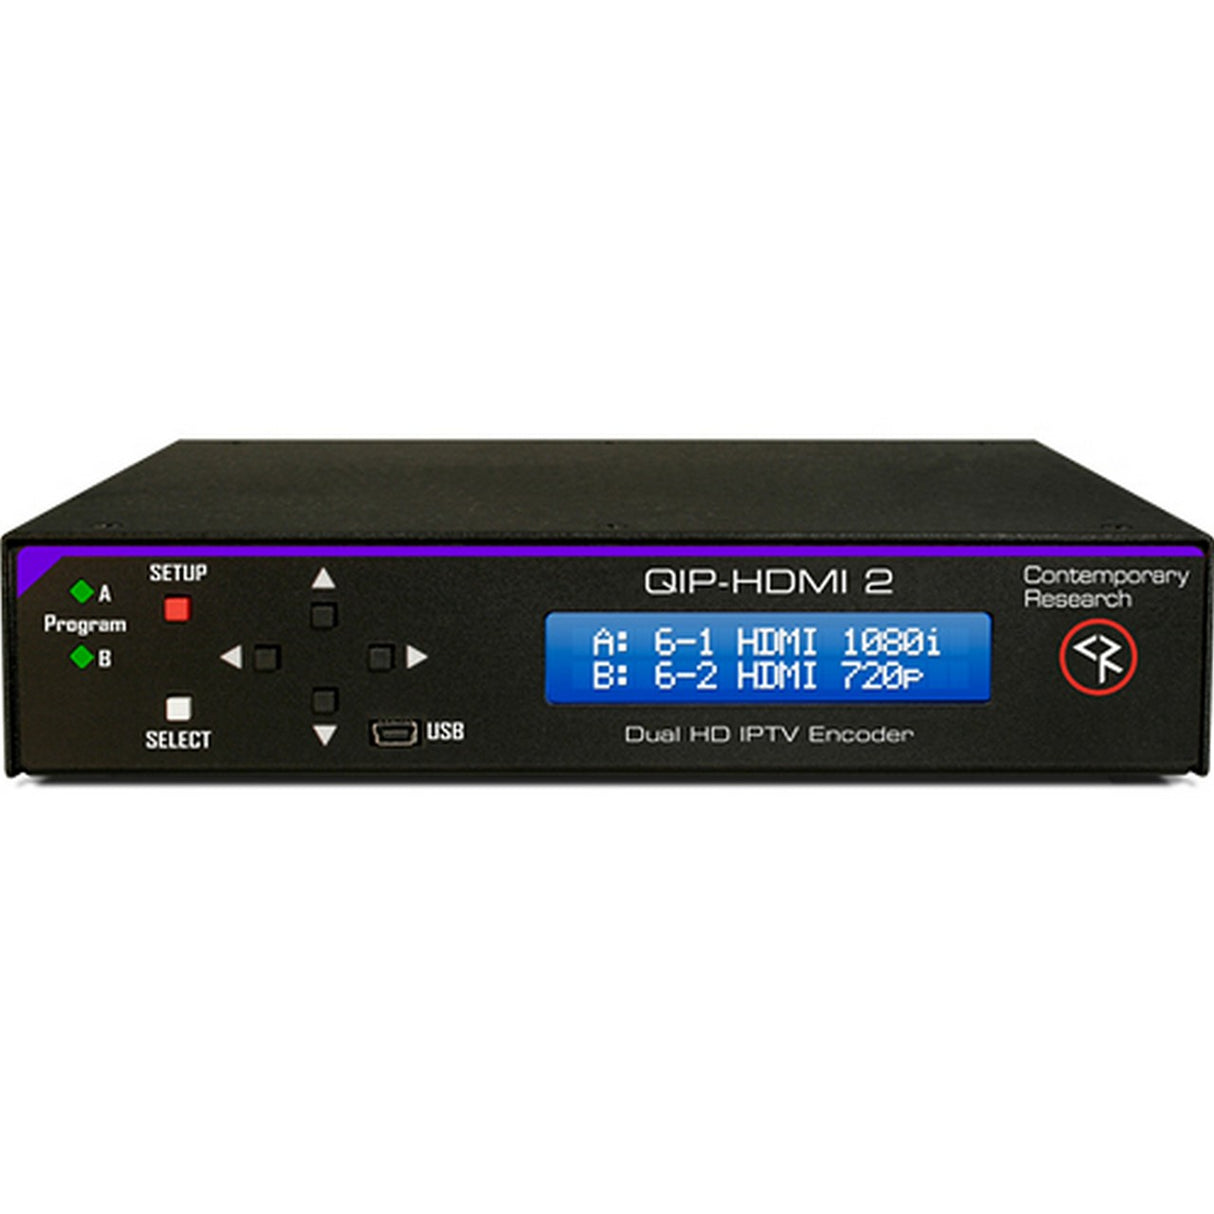 Contemporary Research QIP-HDMI 2 | IPTV Encoder